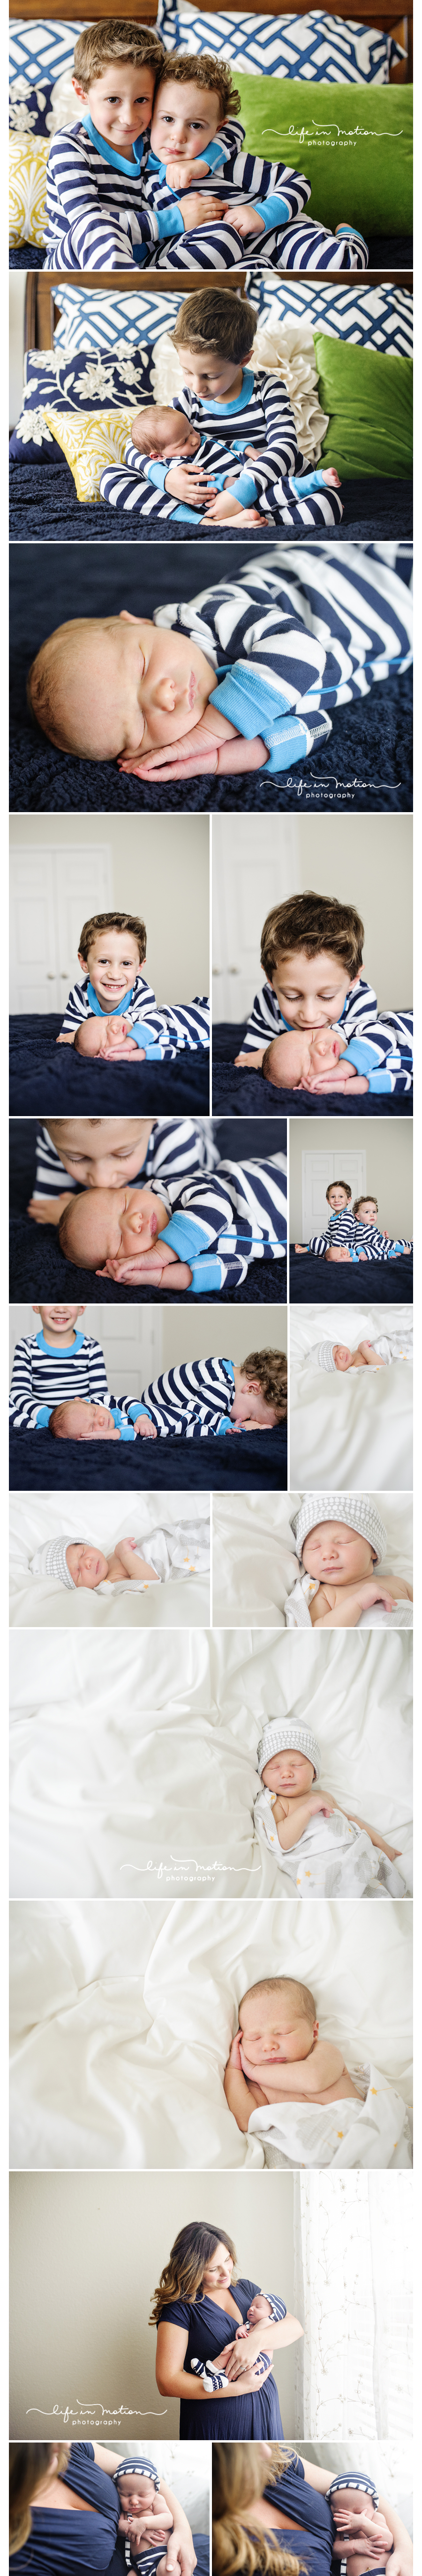 newborn lifestyle family photos austin